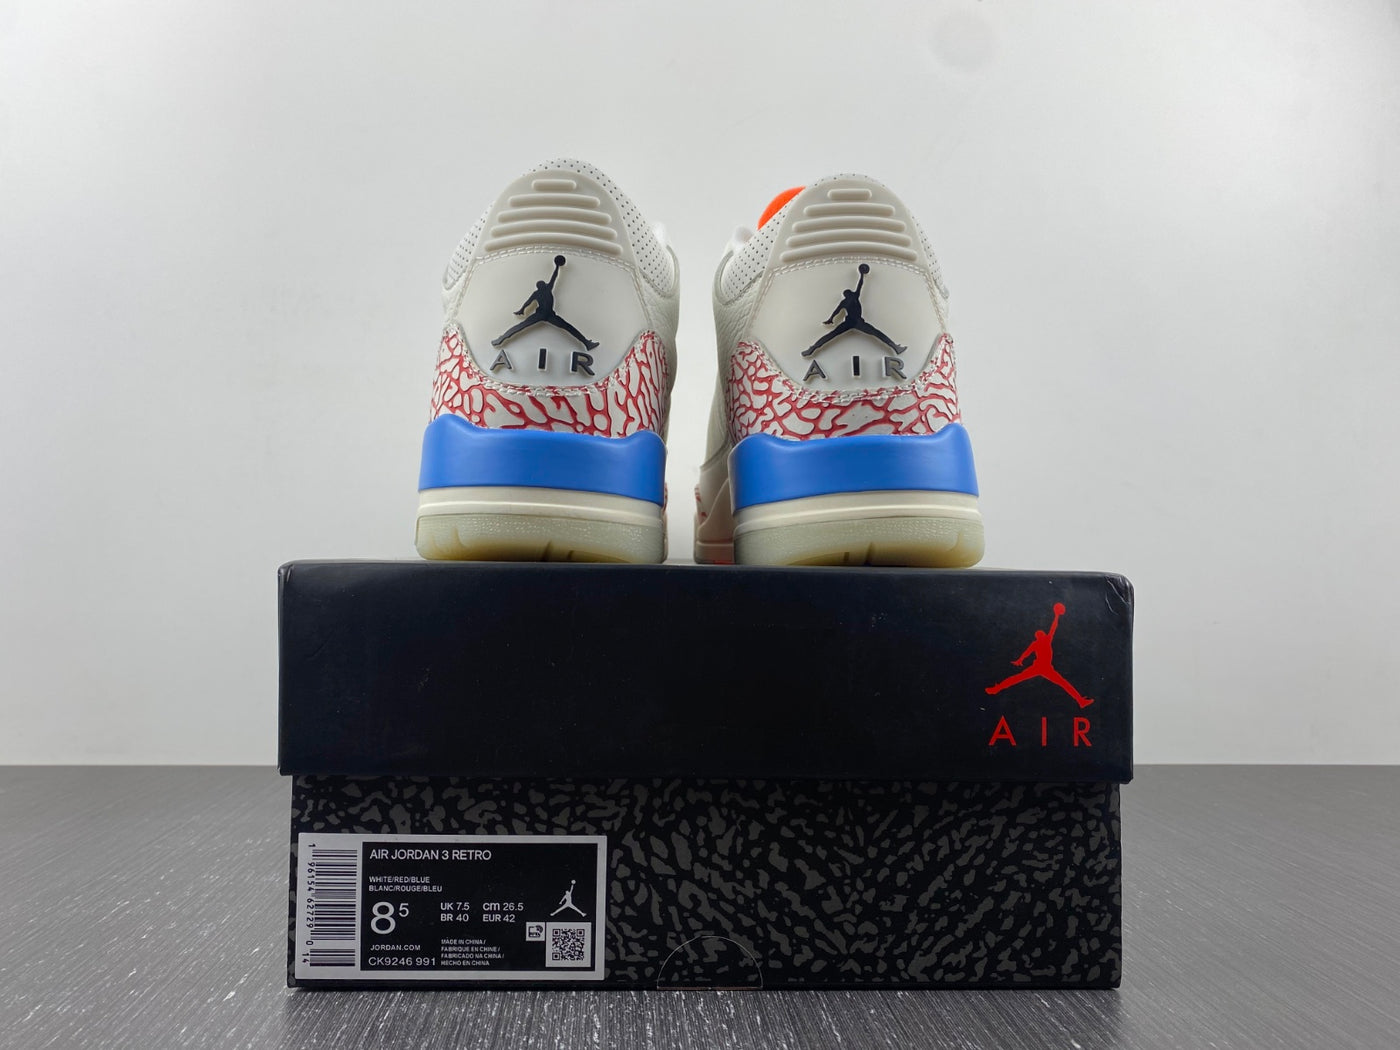 Air Jordan 3 "Mr. Triple Double"